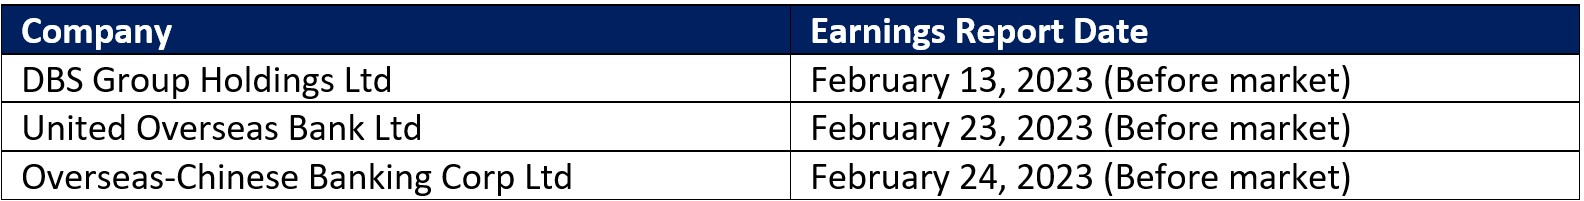 Singapore bank earnings dates